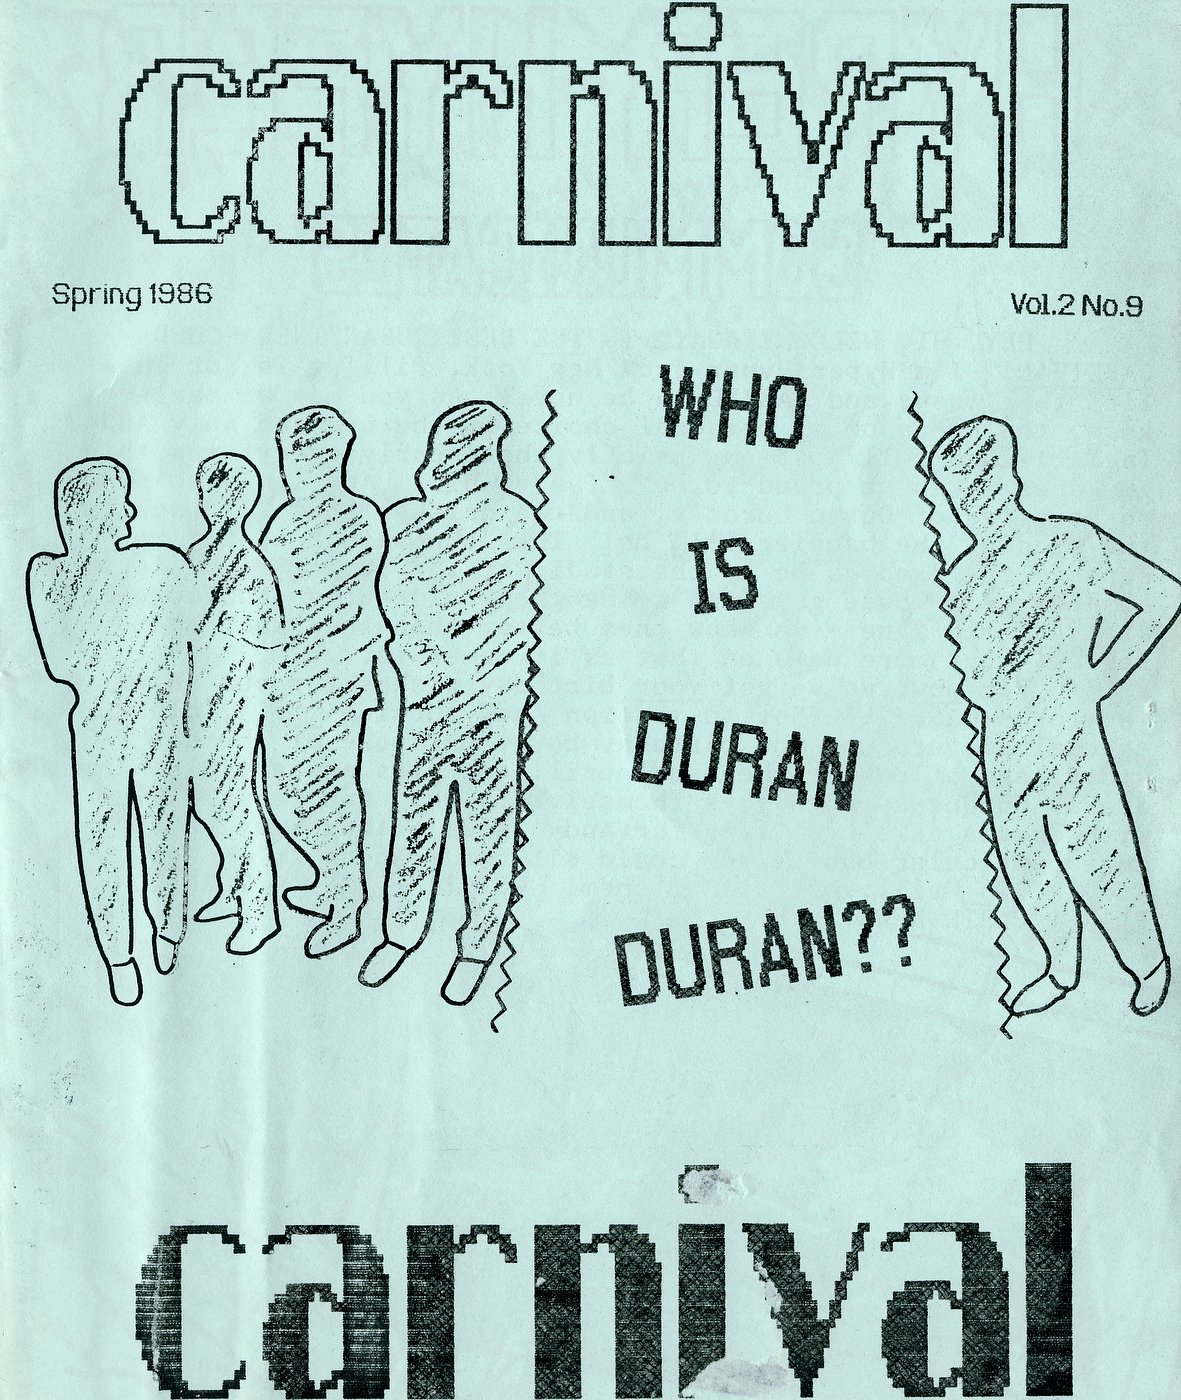 Carnival Duran Duran fanzine (1986)